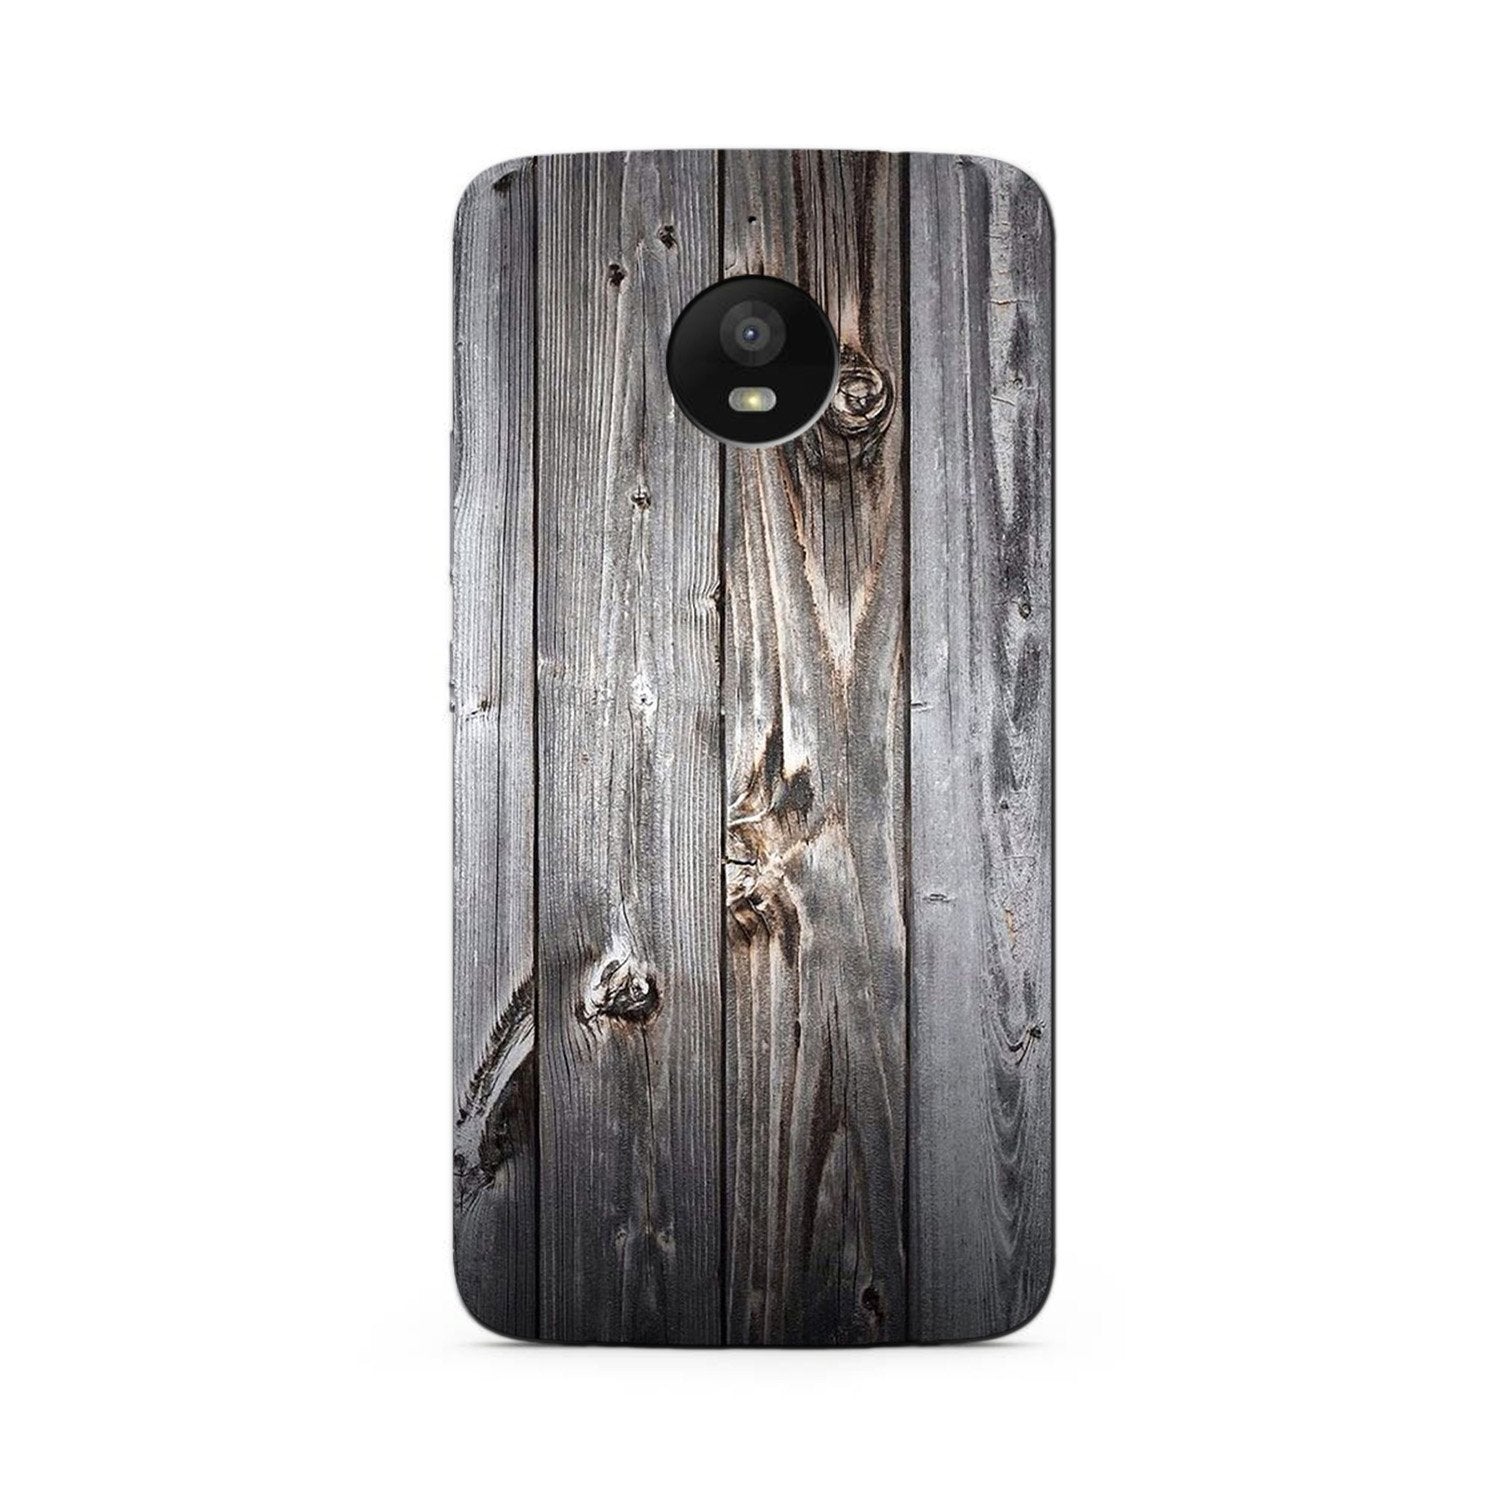 Wooden Look Case for Moto E4 Plus(Design - 114)